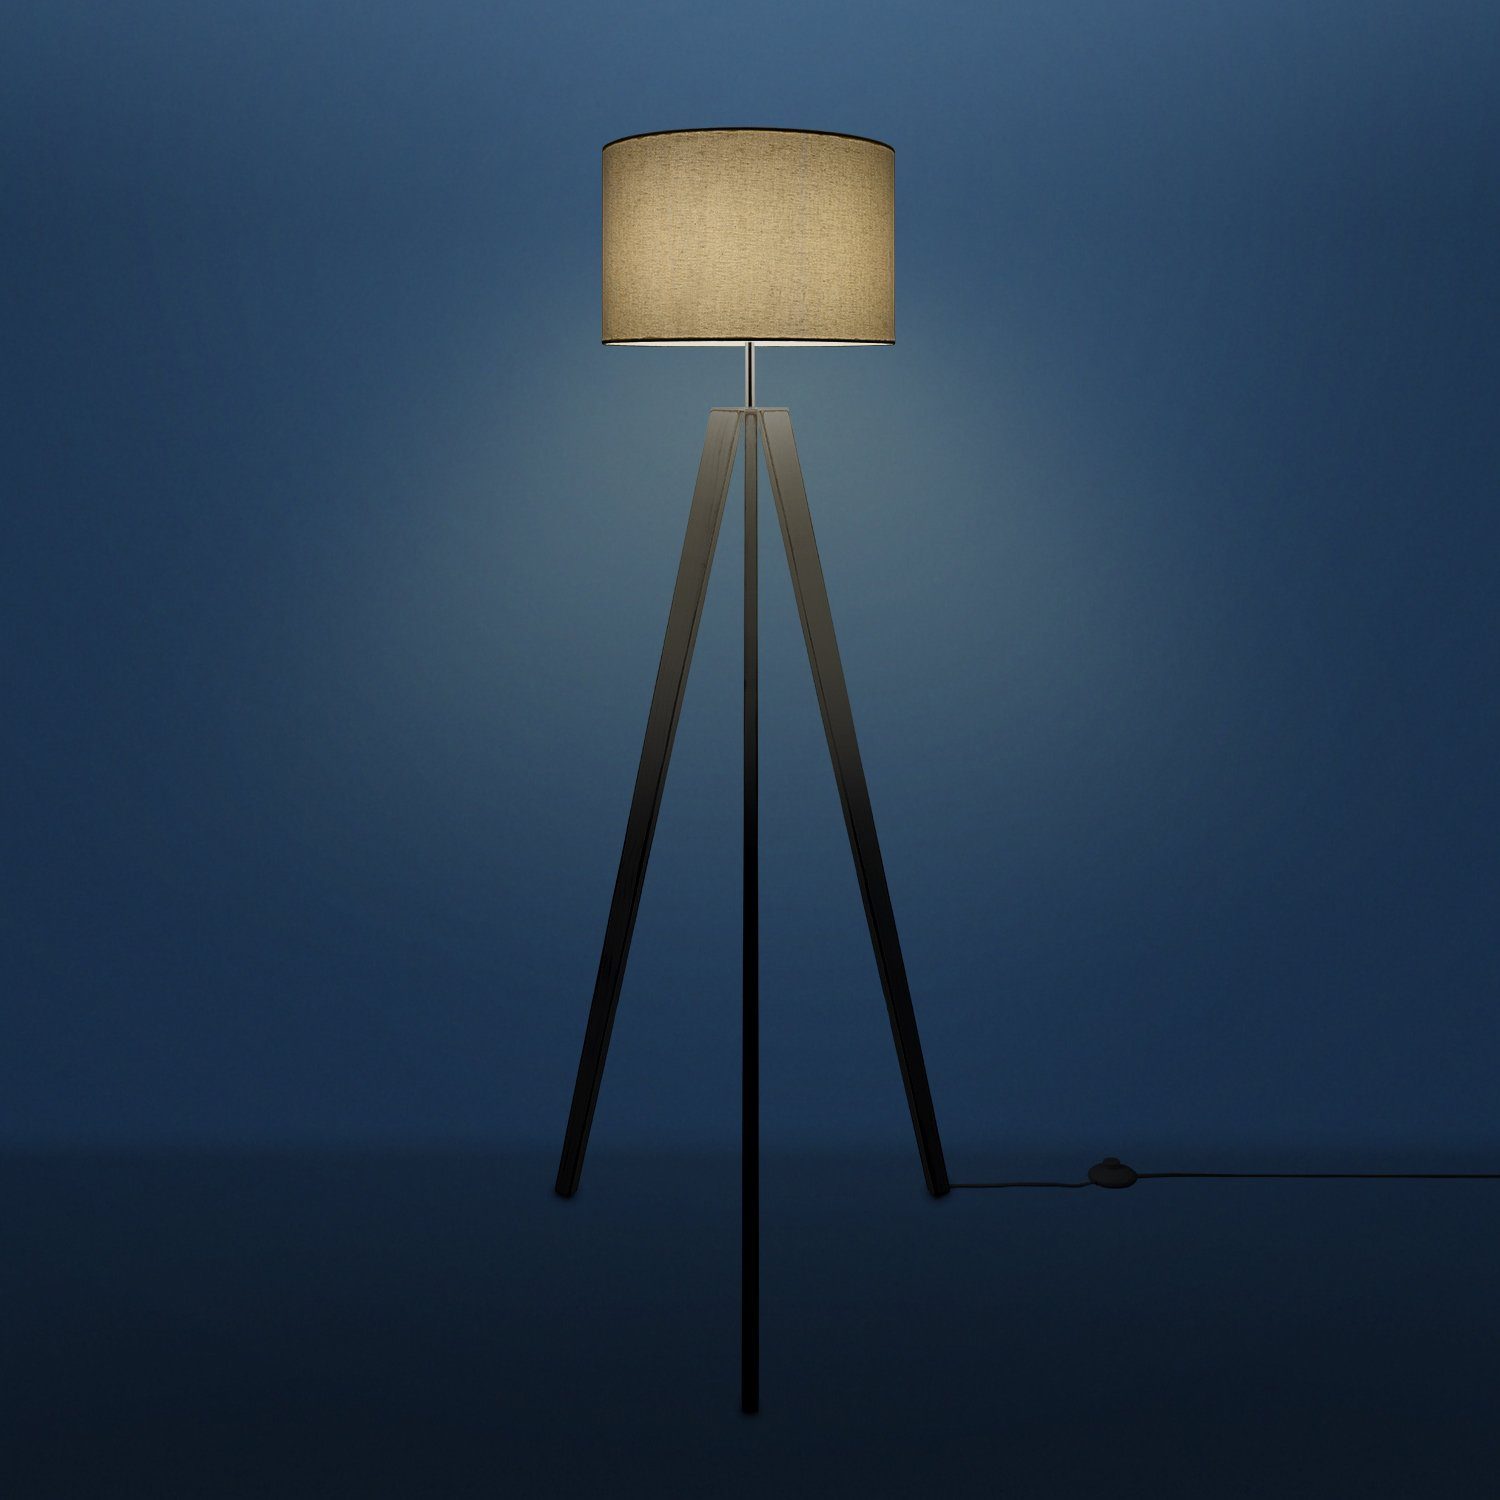 Skandinavischer Stehlampe Home Stil Canvas Wohnzimmer uni Vintage E27 Leuchtmittel, Color, Lampe LED Stehlampe Paco ohne Fuß